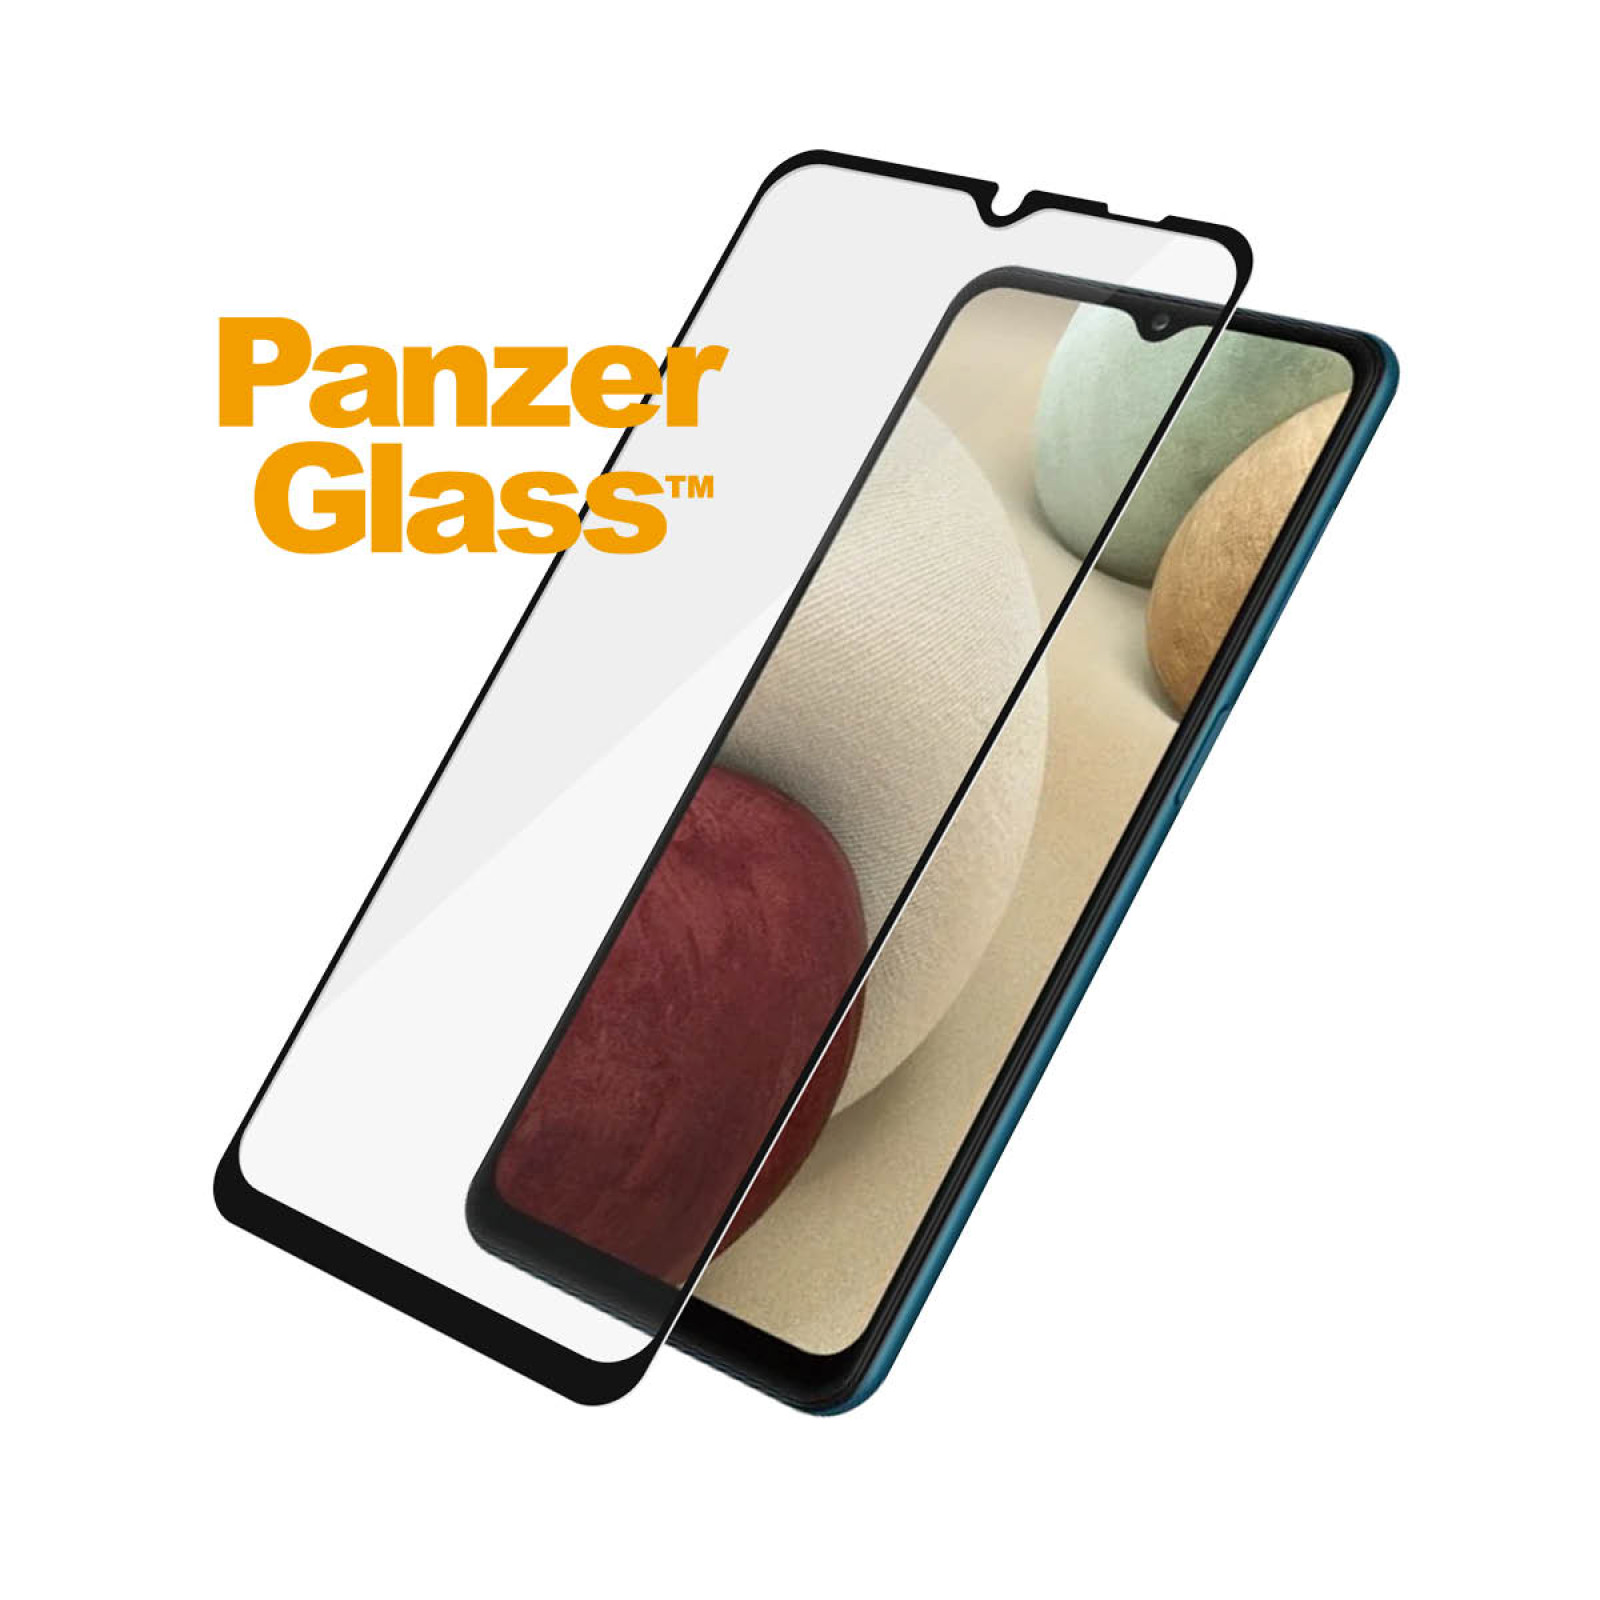 Стъклен протектор PanzerGlass за Samsung Galaxy A12 , CaseFriendly - Black